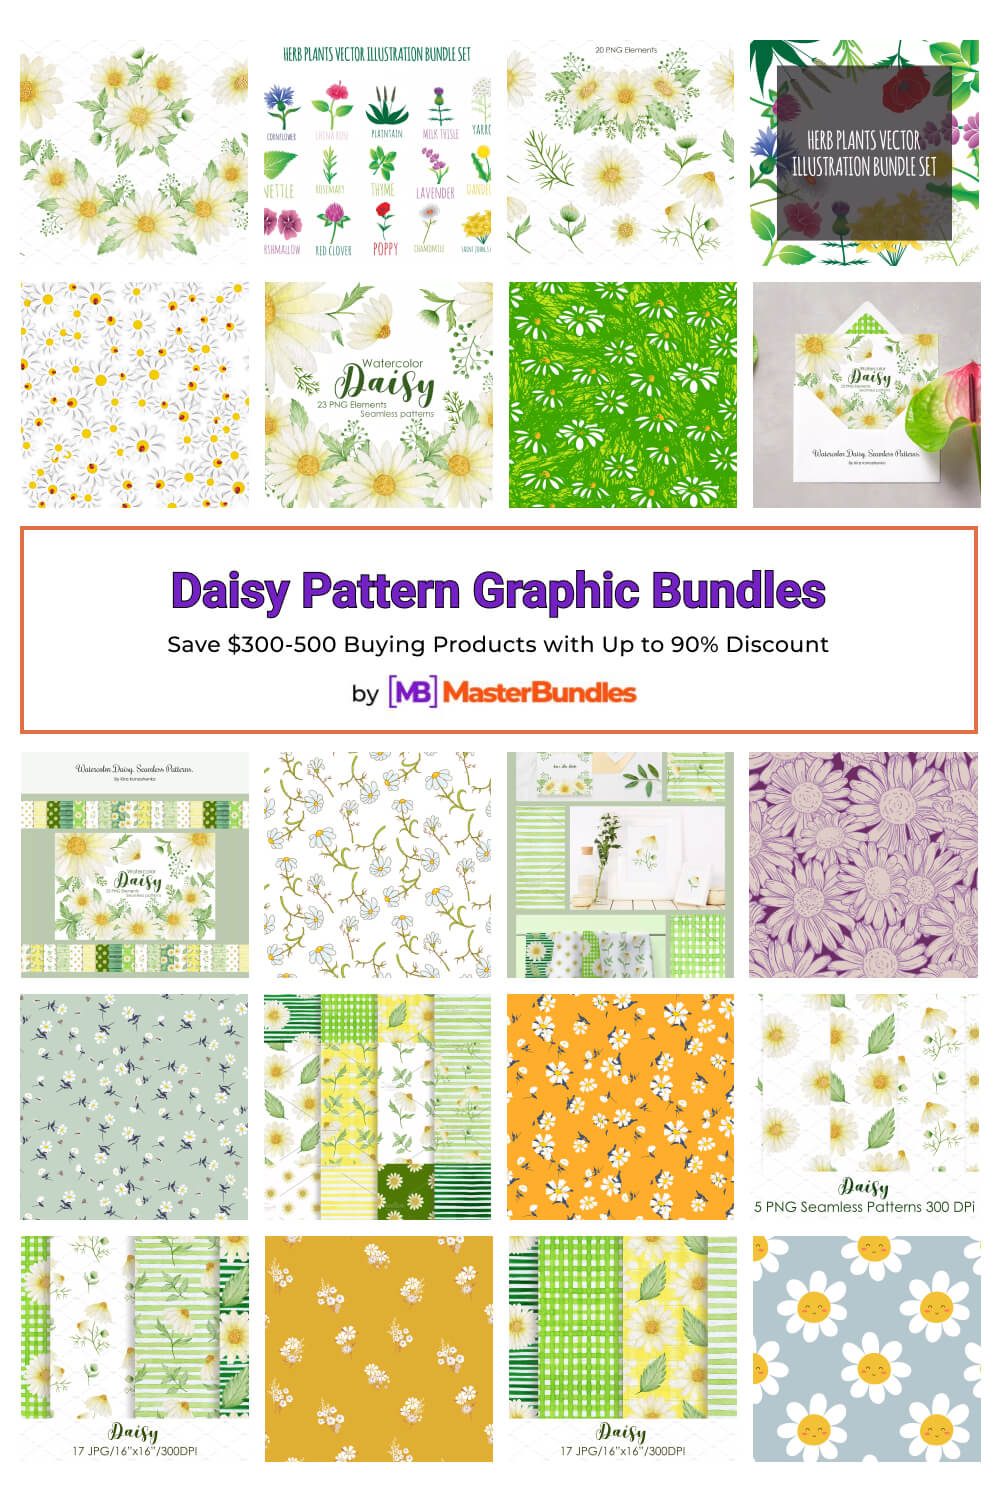 daisy pattern graphic bundles pinterest image.